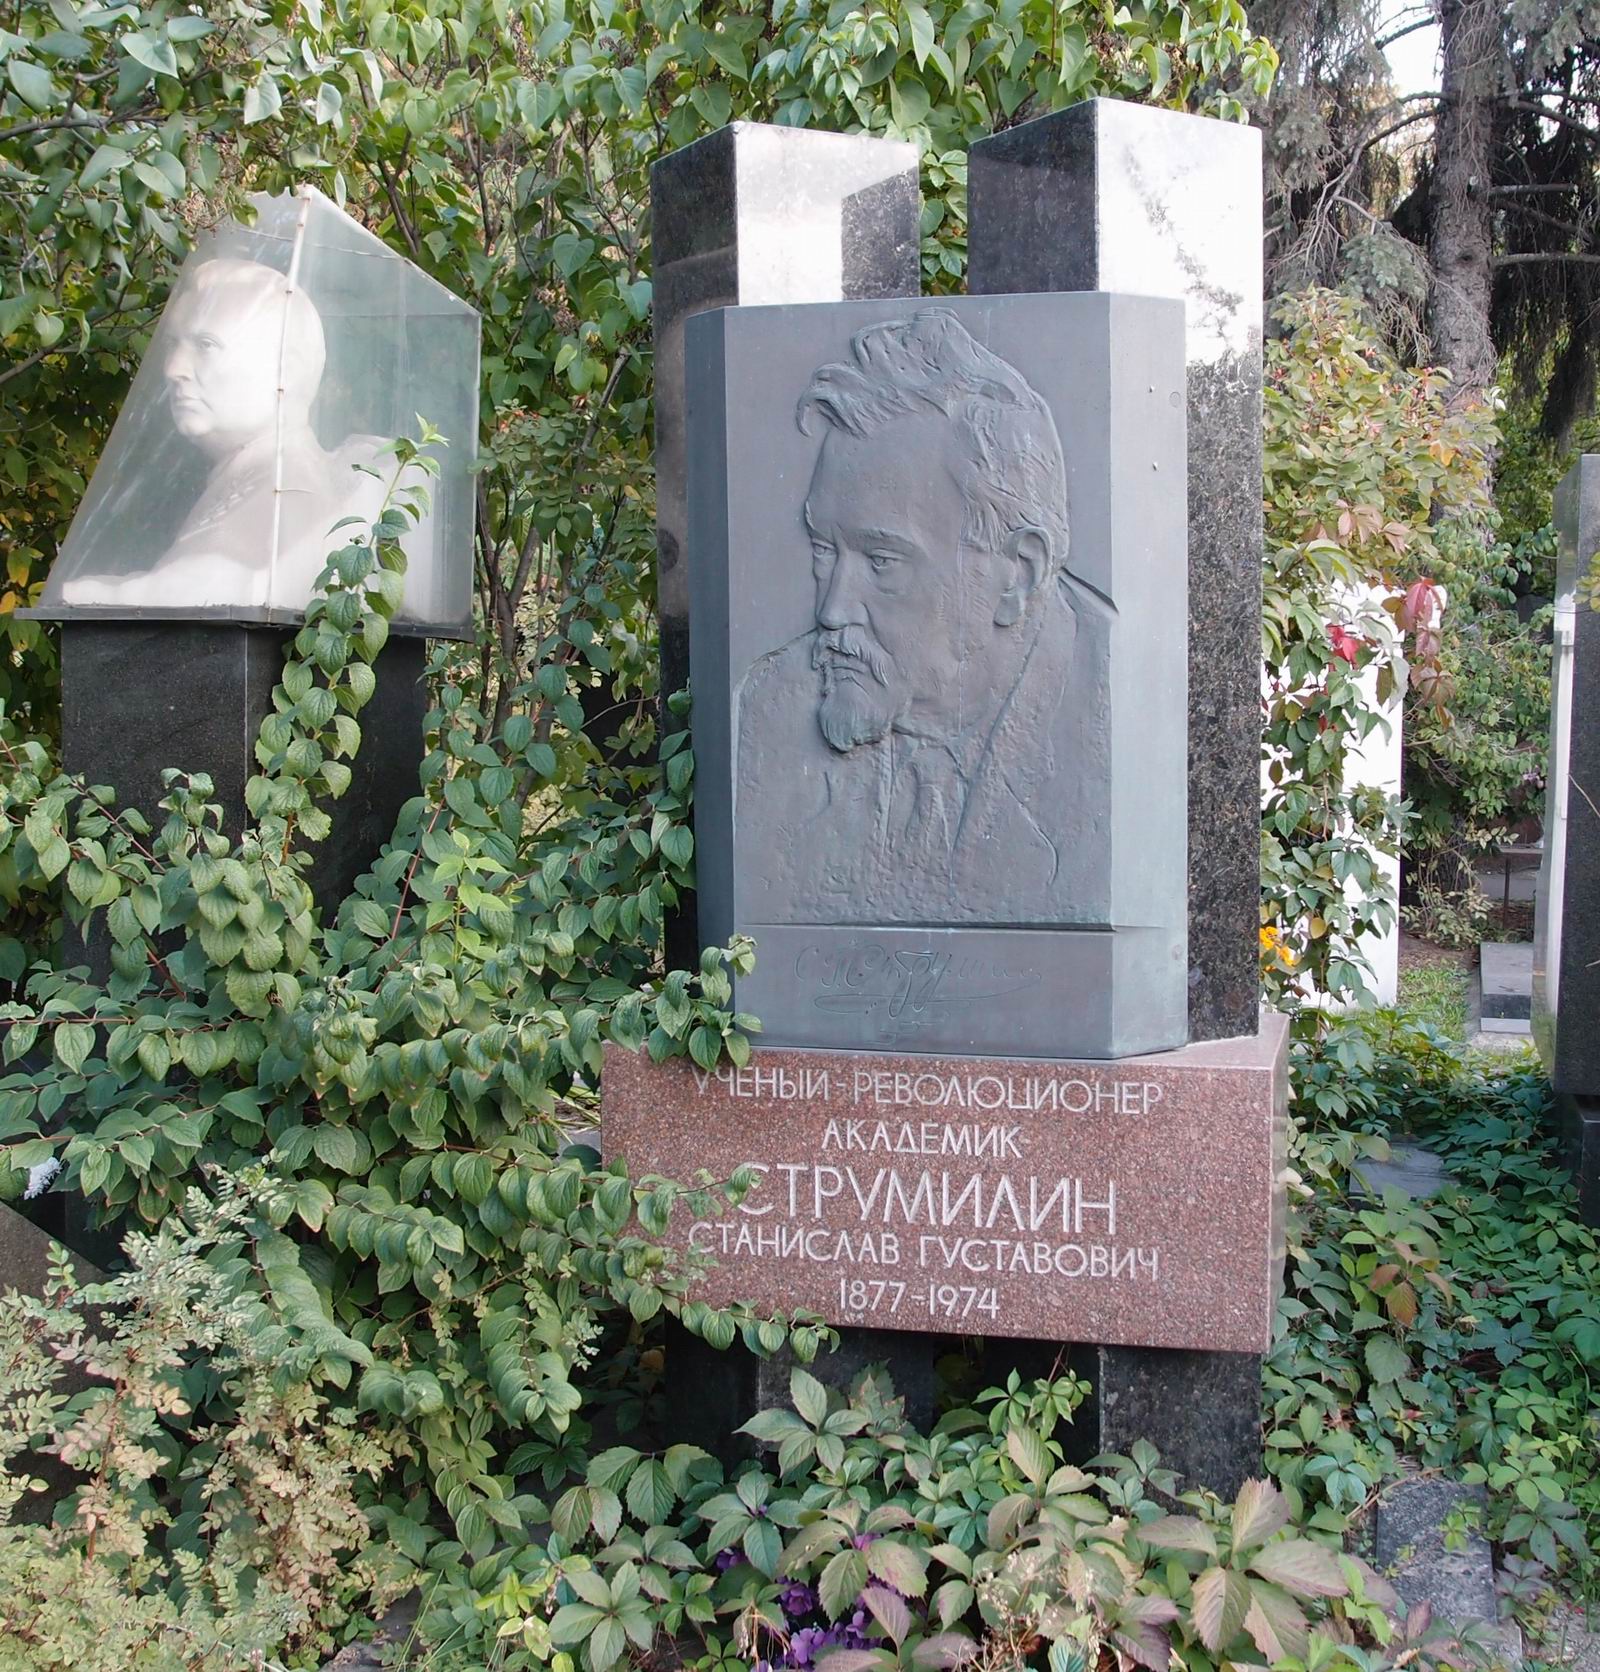 Памятник на могиле Струмилина С.Г. (1877-1974), ск. Л.Балтаян, арх. Е.Кутырев, на Новодевичьем кладбище (7-8-21).